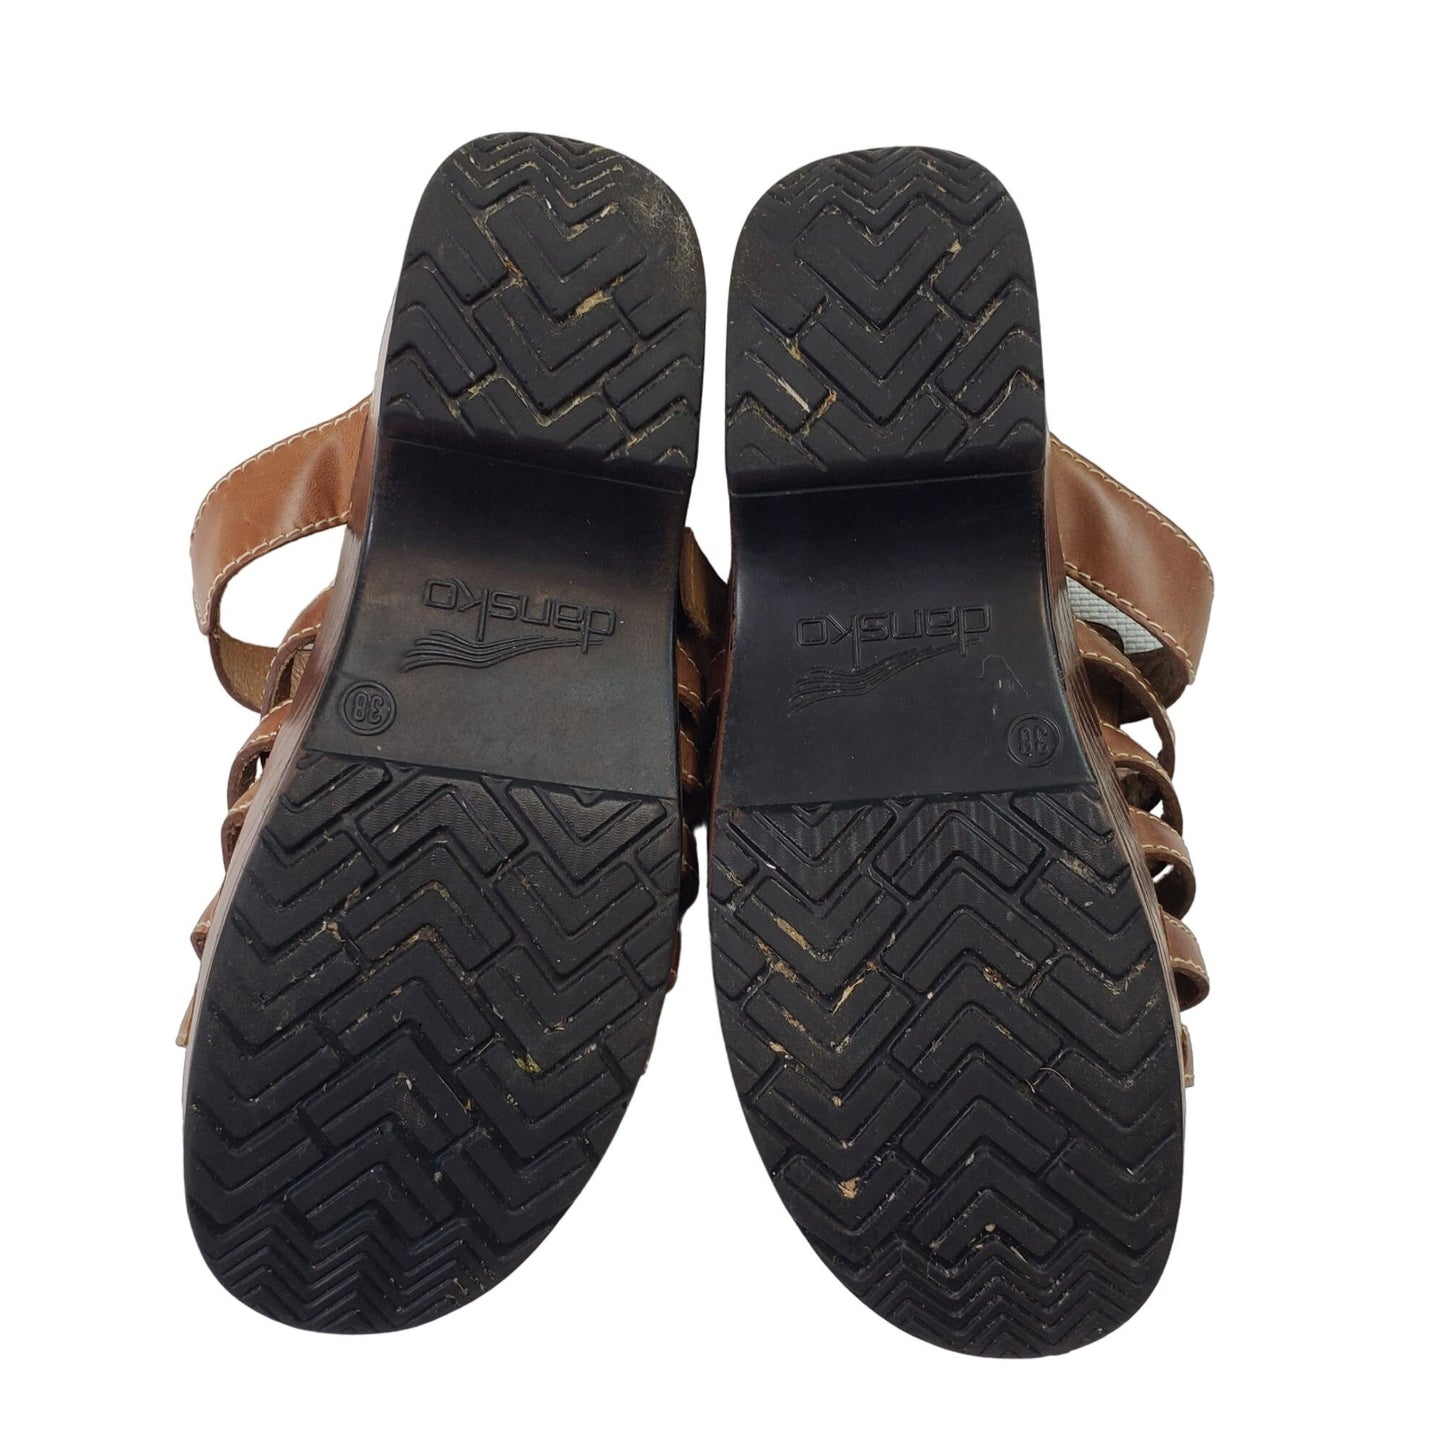 Dansko Marion Leather Sandals Size 38